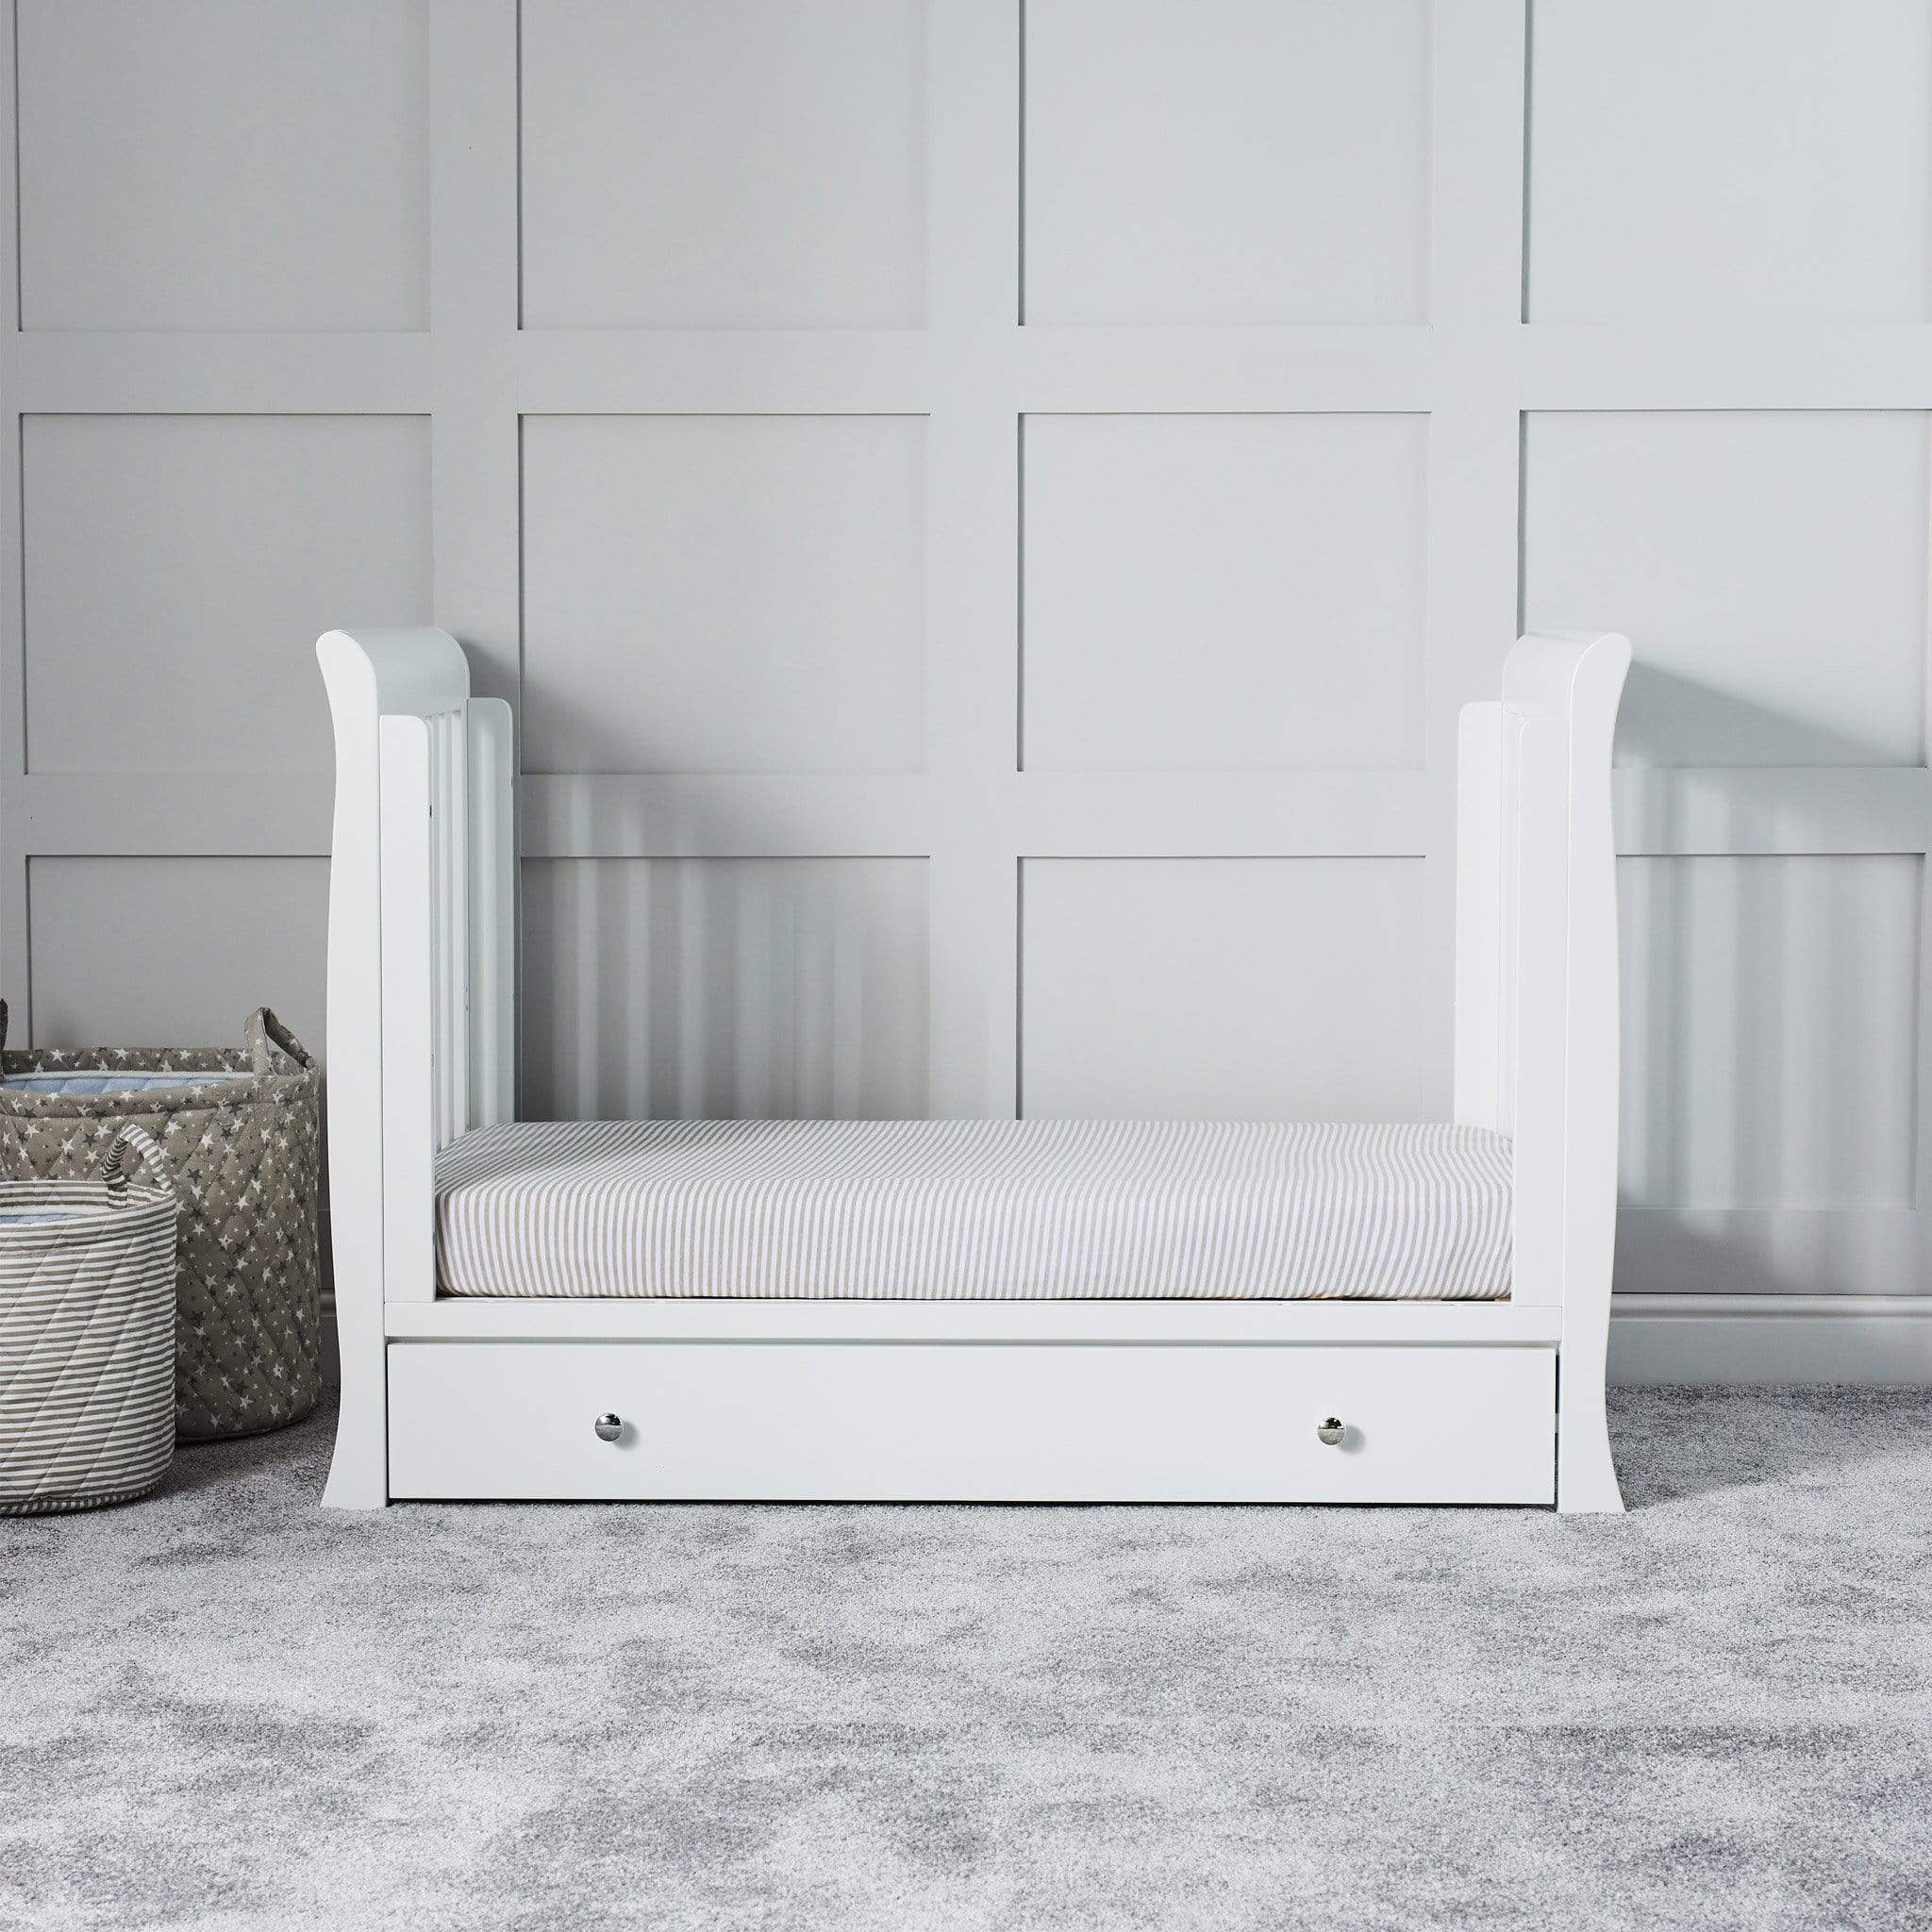 Ickle Bubba Snowdon 4 in 1 Mini 3 Piece Furniture Set - White Nursery Room Sets